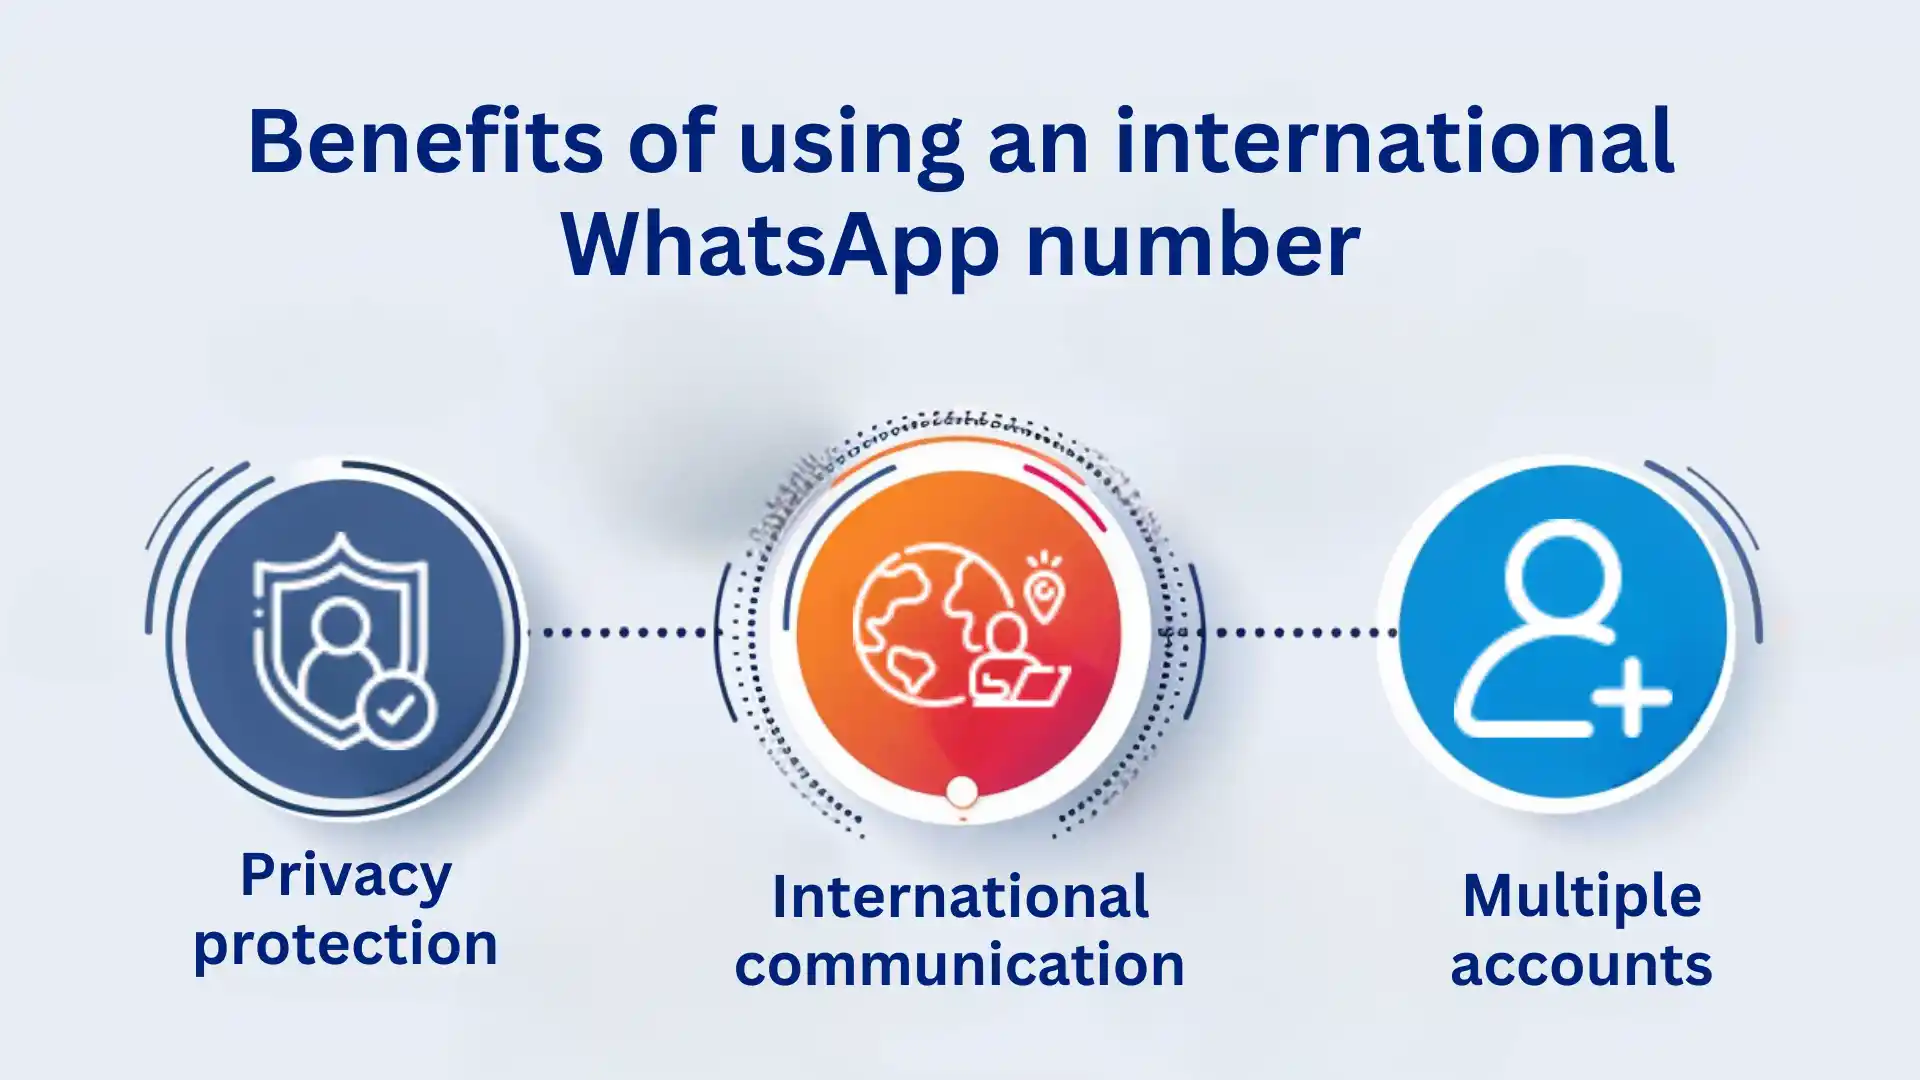 Benefits of using an international WhatsApp number